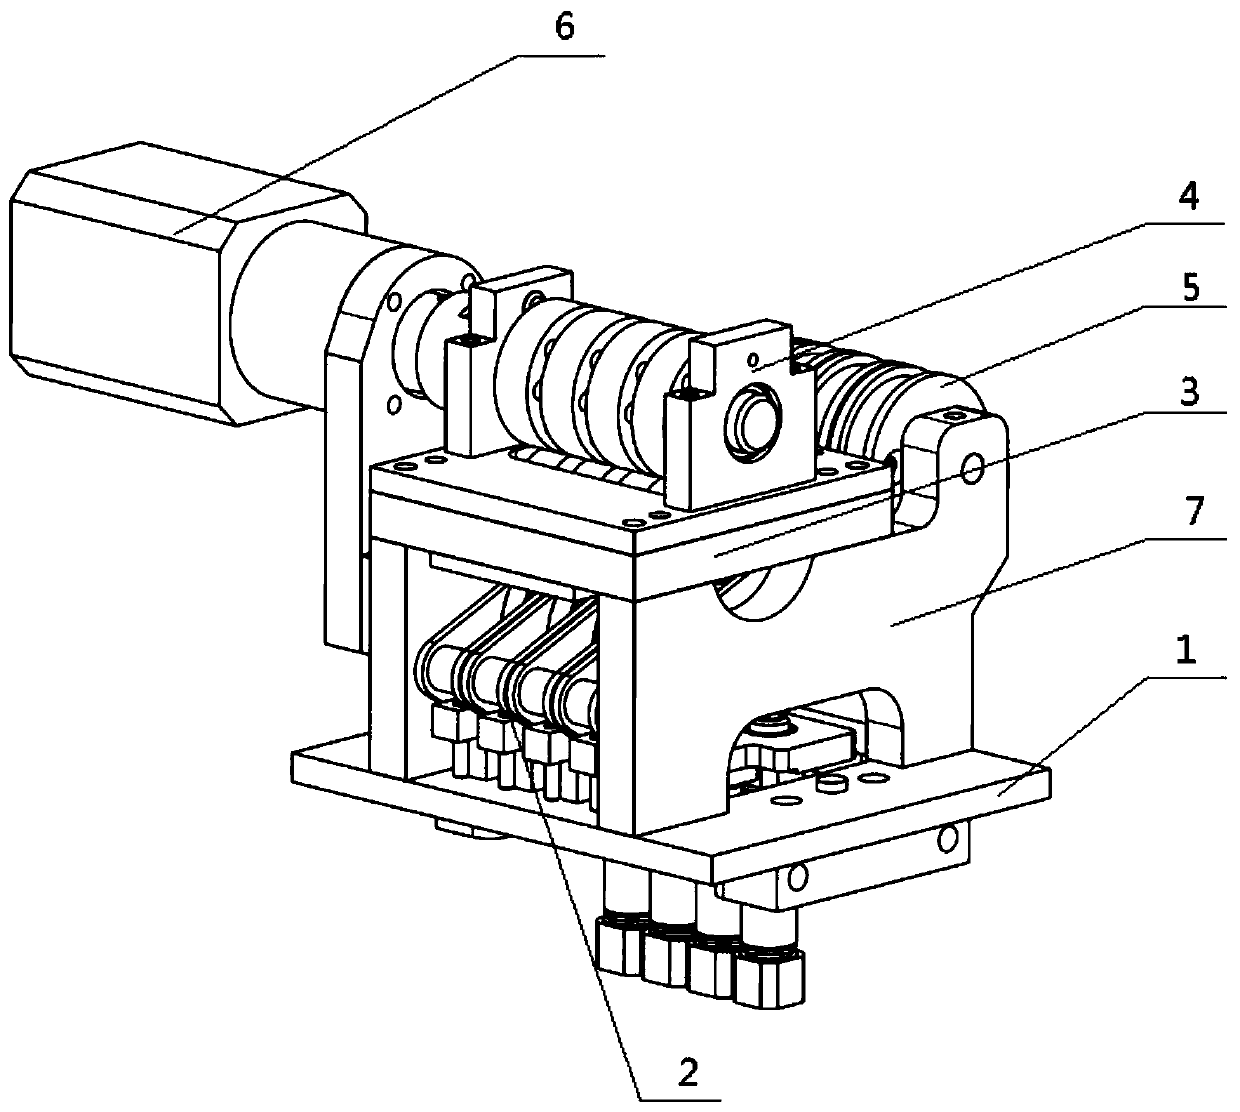 Fiber bundle tension reducing mechanism for automatic fiber placing machine